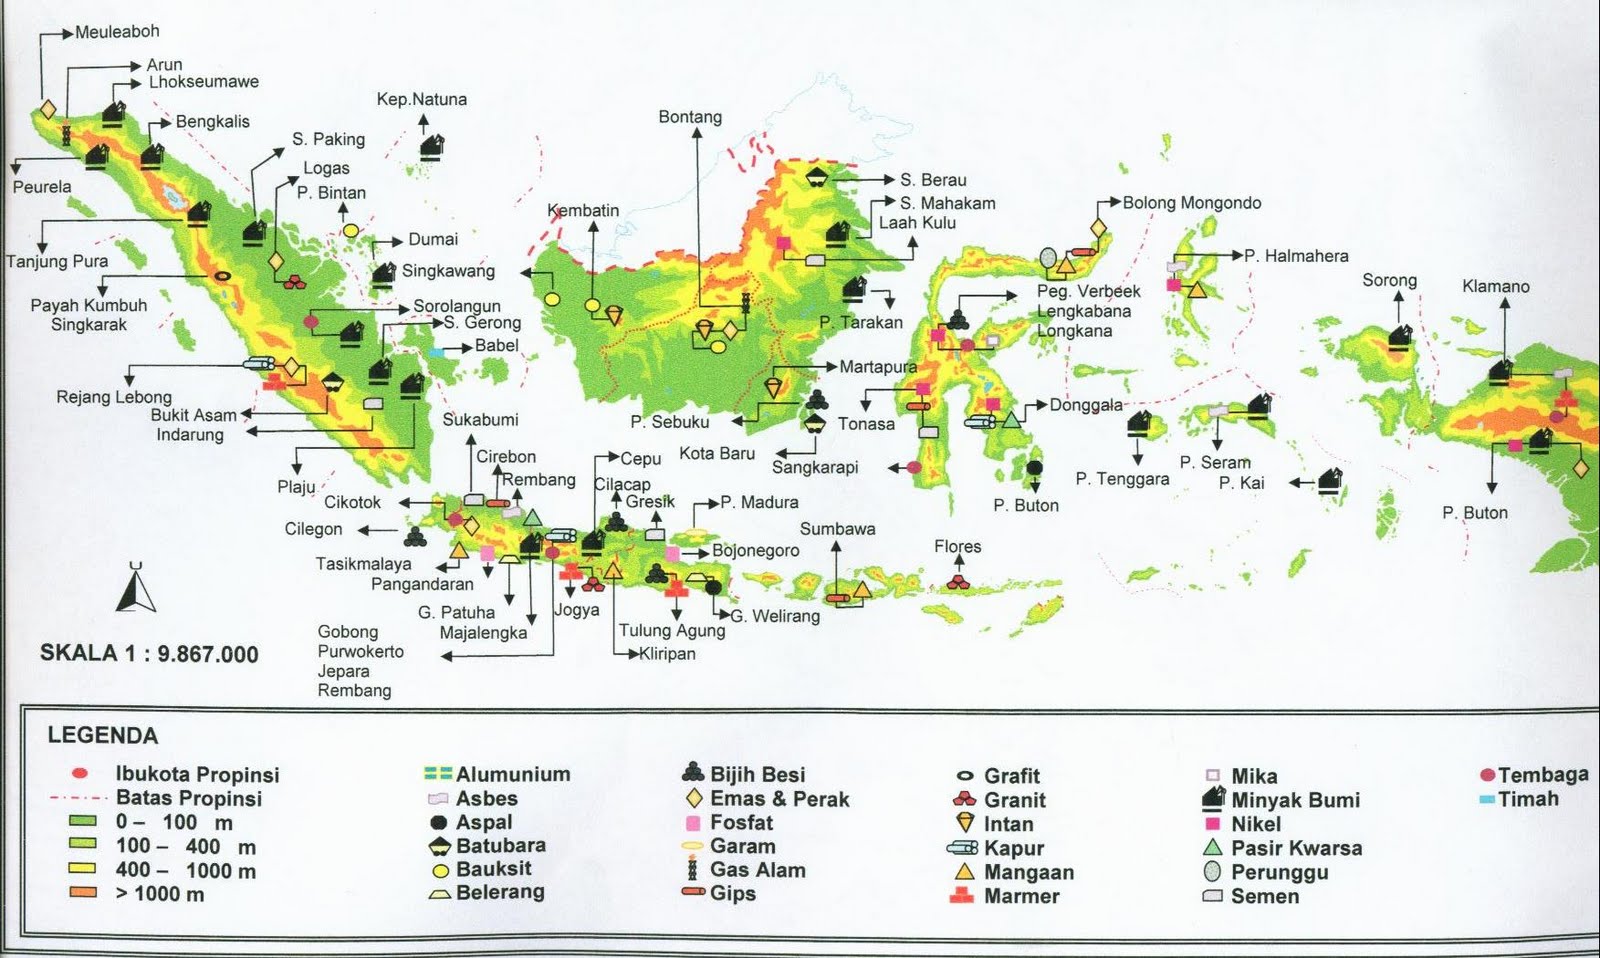 Geografi lingkungan: Persebaran Barang Tambang di Indonesia